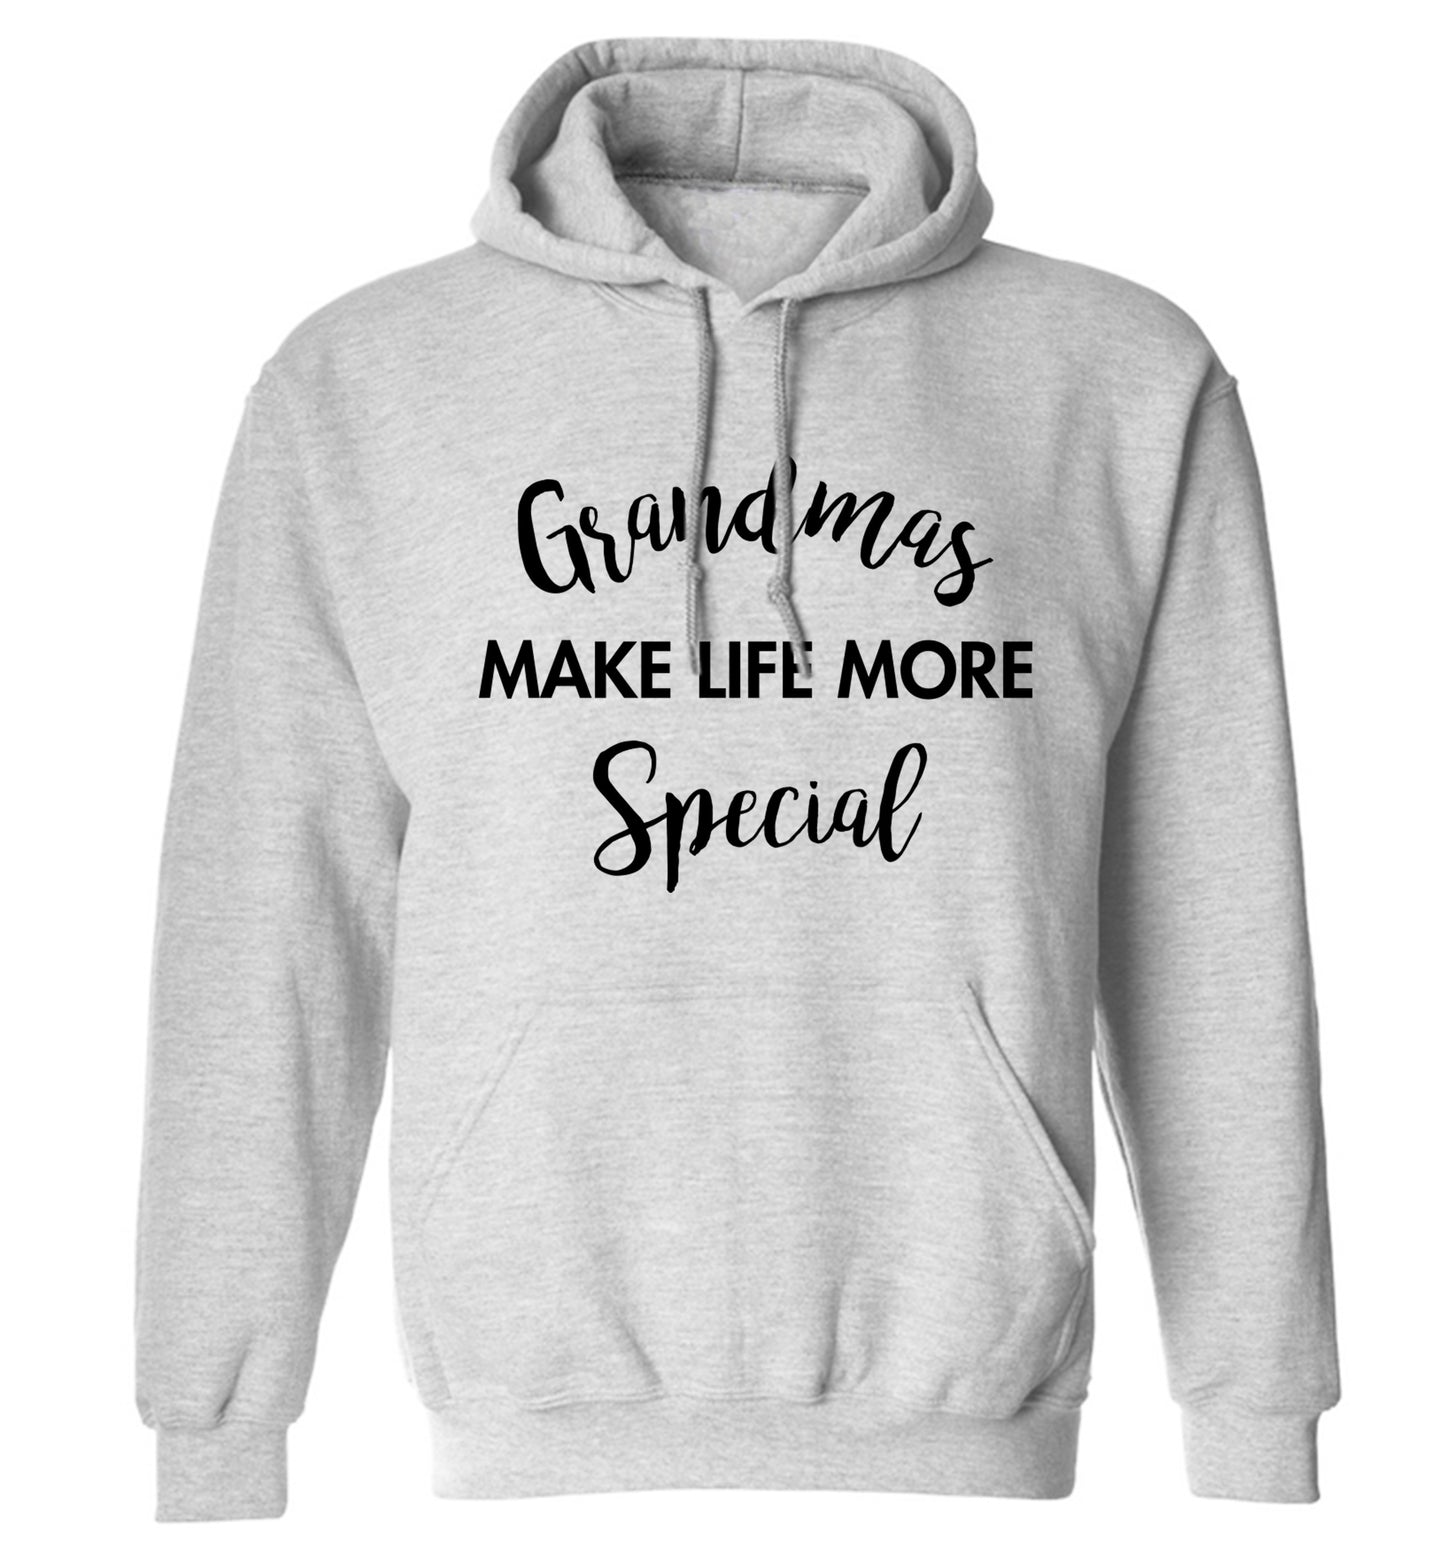 Grandmas make life more special adults unisex grey hoodie 2XL